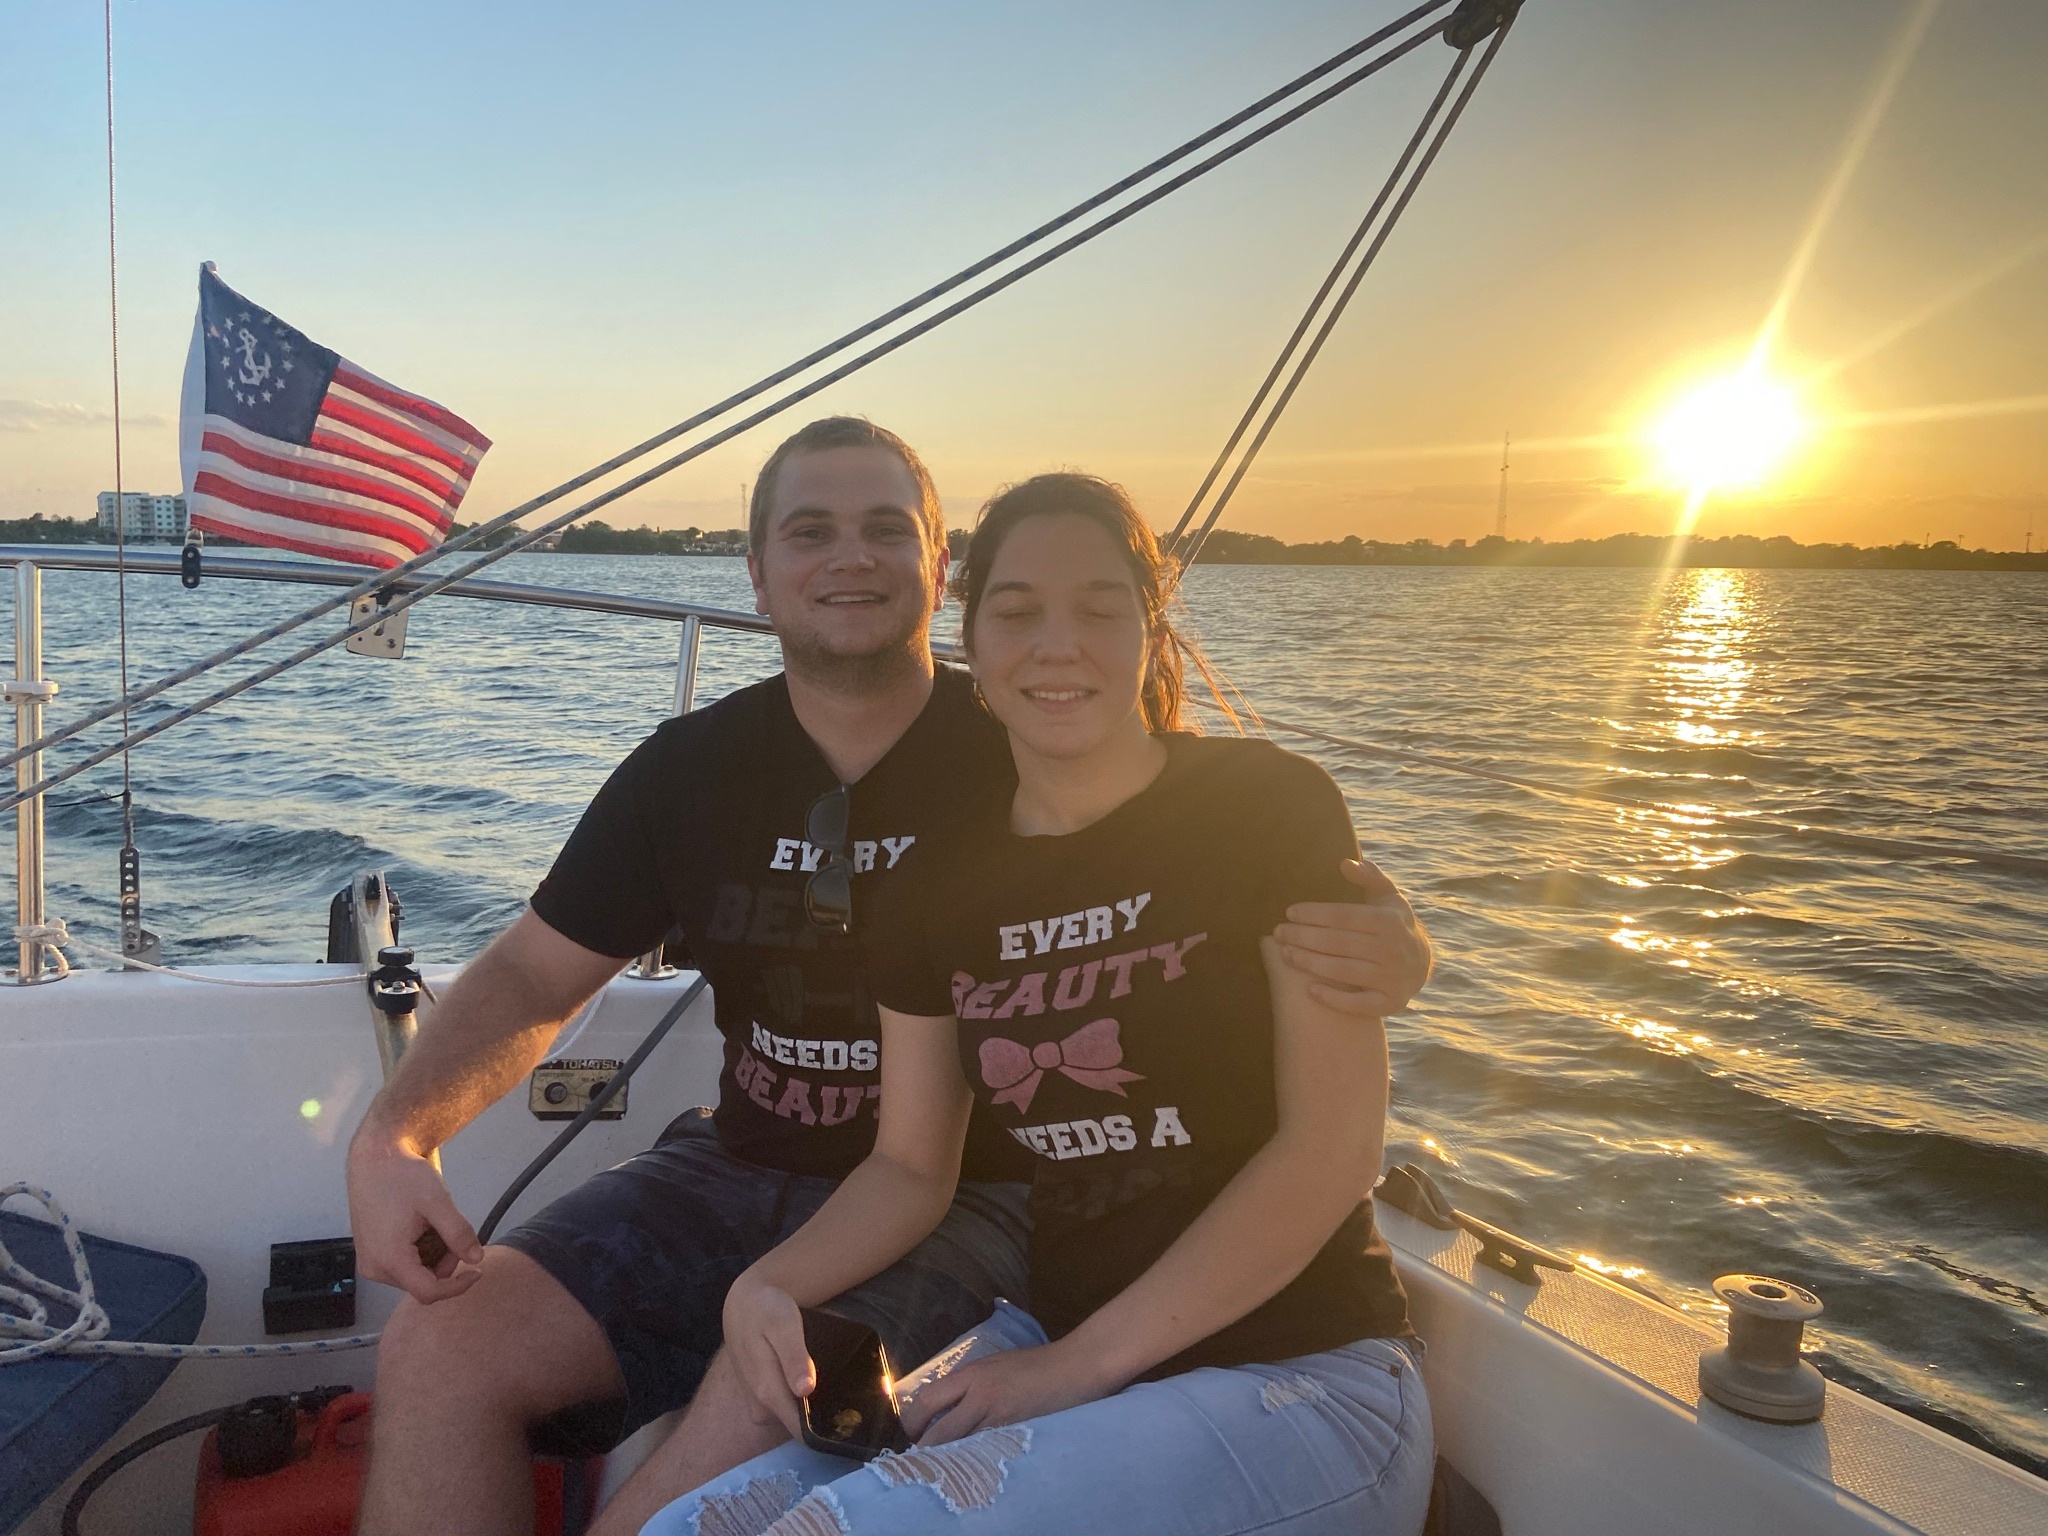 Sunset Sailing Cruise in Orlando